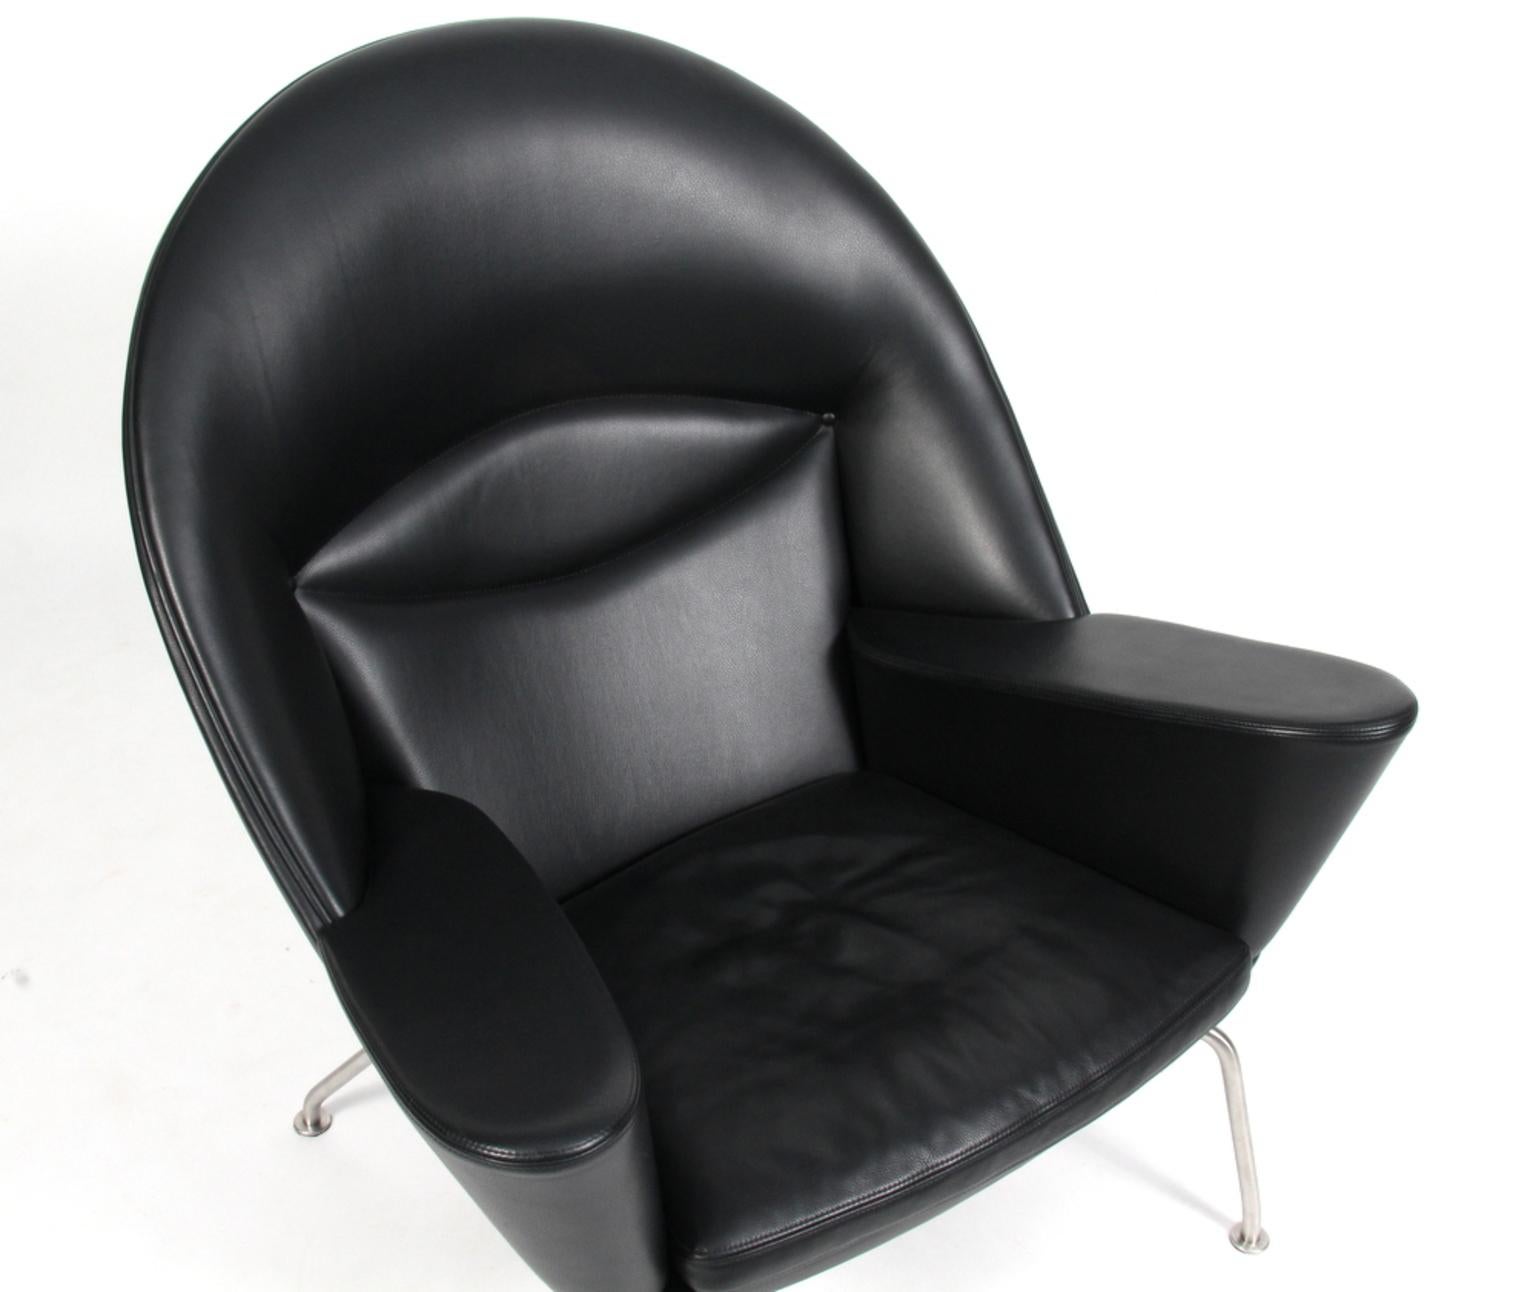 Hans J. Wegner lounge chair in black original Thor leather.

Legs of brushed stainless steel.

Model Oculus, made by Carl Hansen.